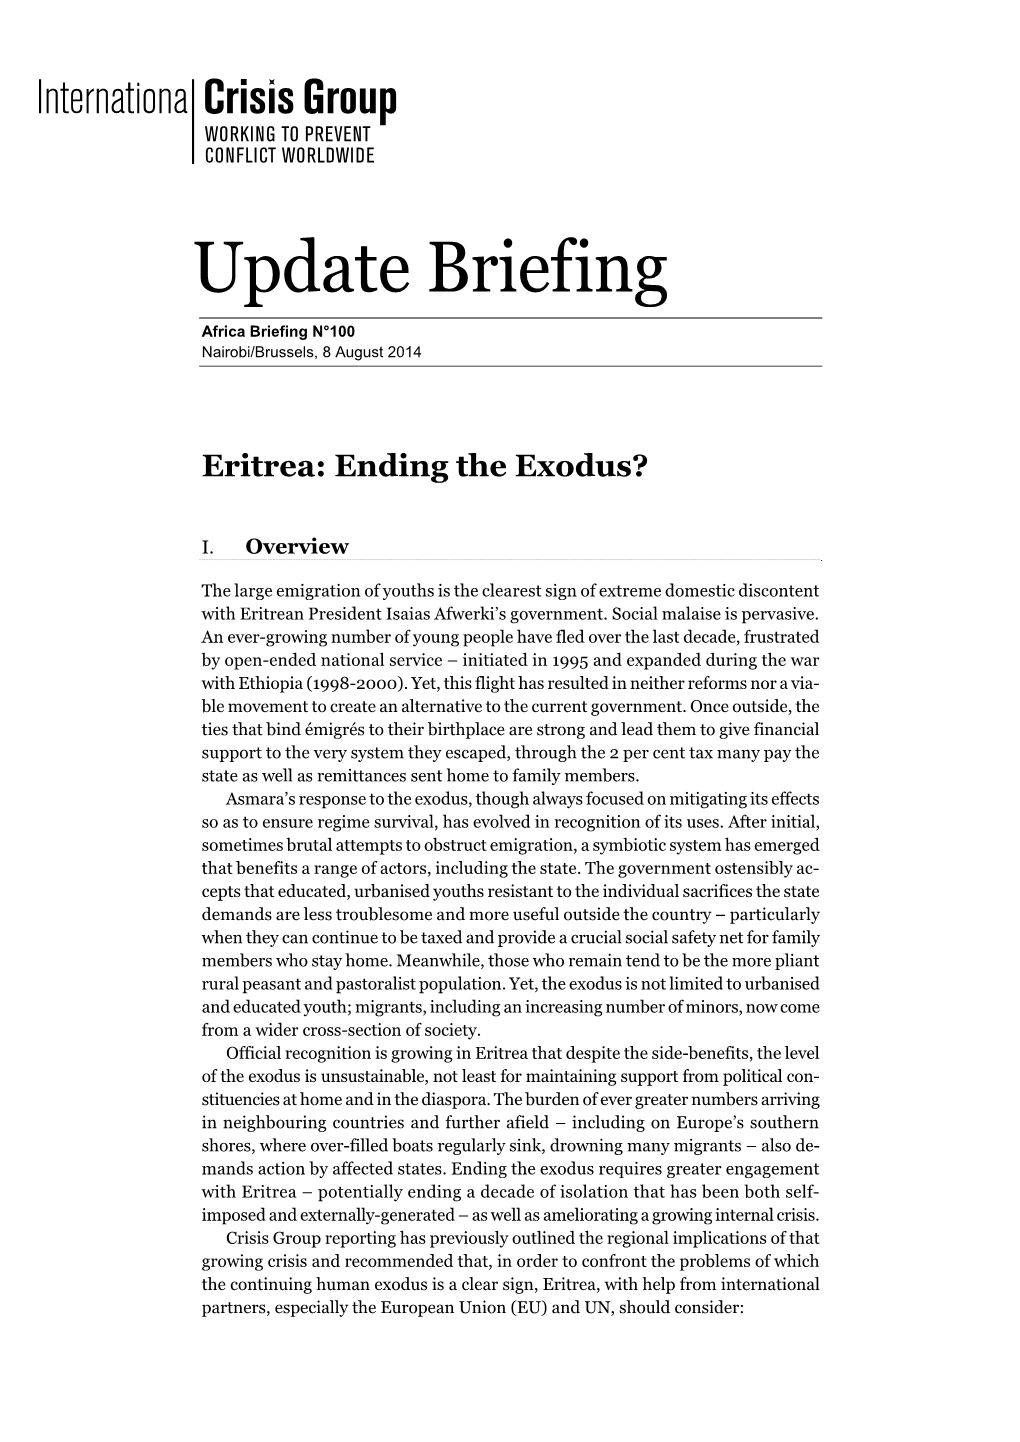 Eritrea: Ending the Exodus?